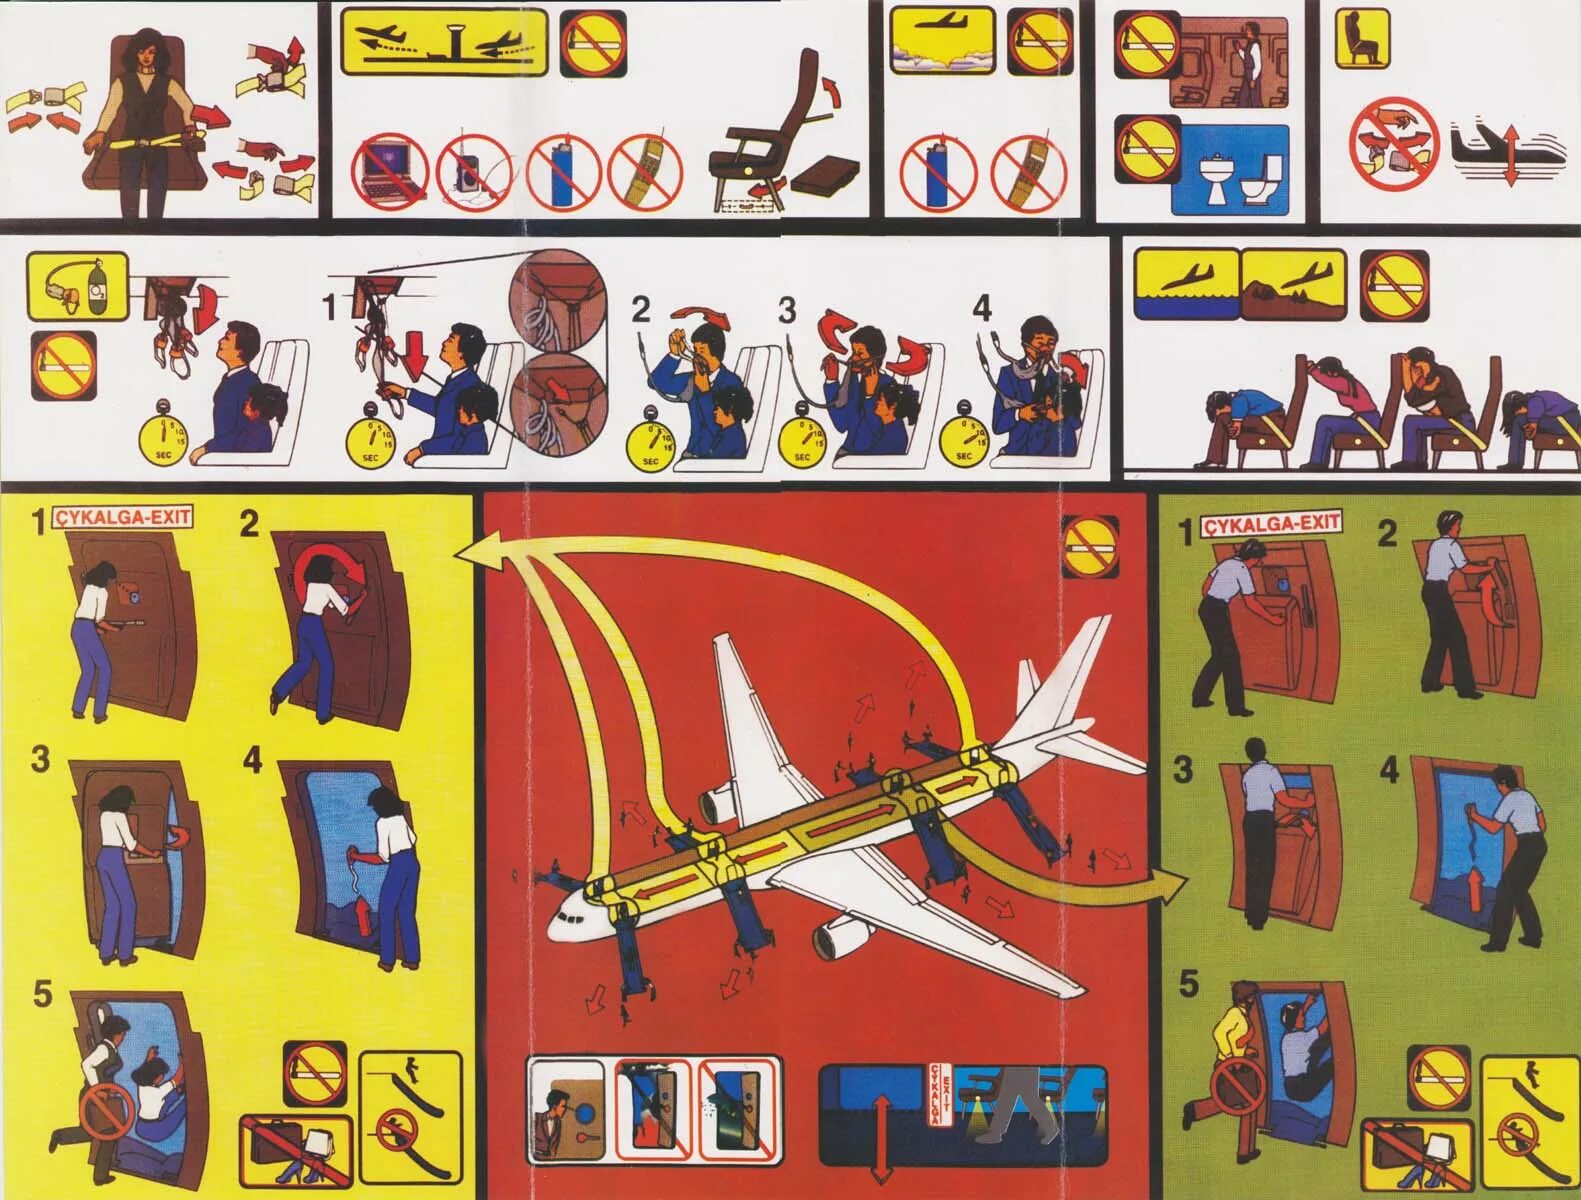 Плакат безопасности в самолете. Безопасность на корабле и в самолете. Безопасность в самолете для детей. Плакат правил безопасности в самолете.